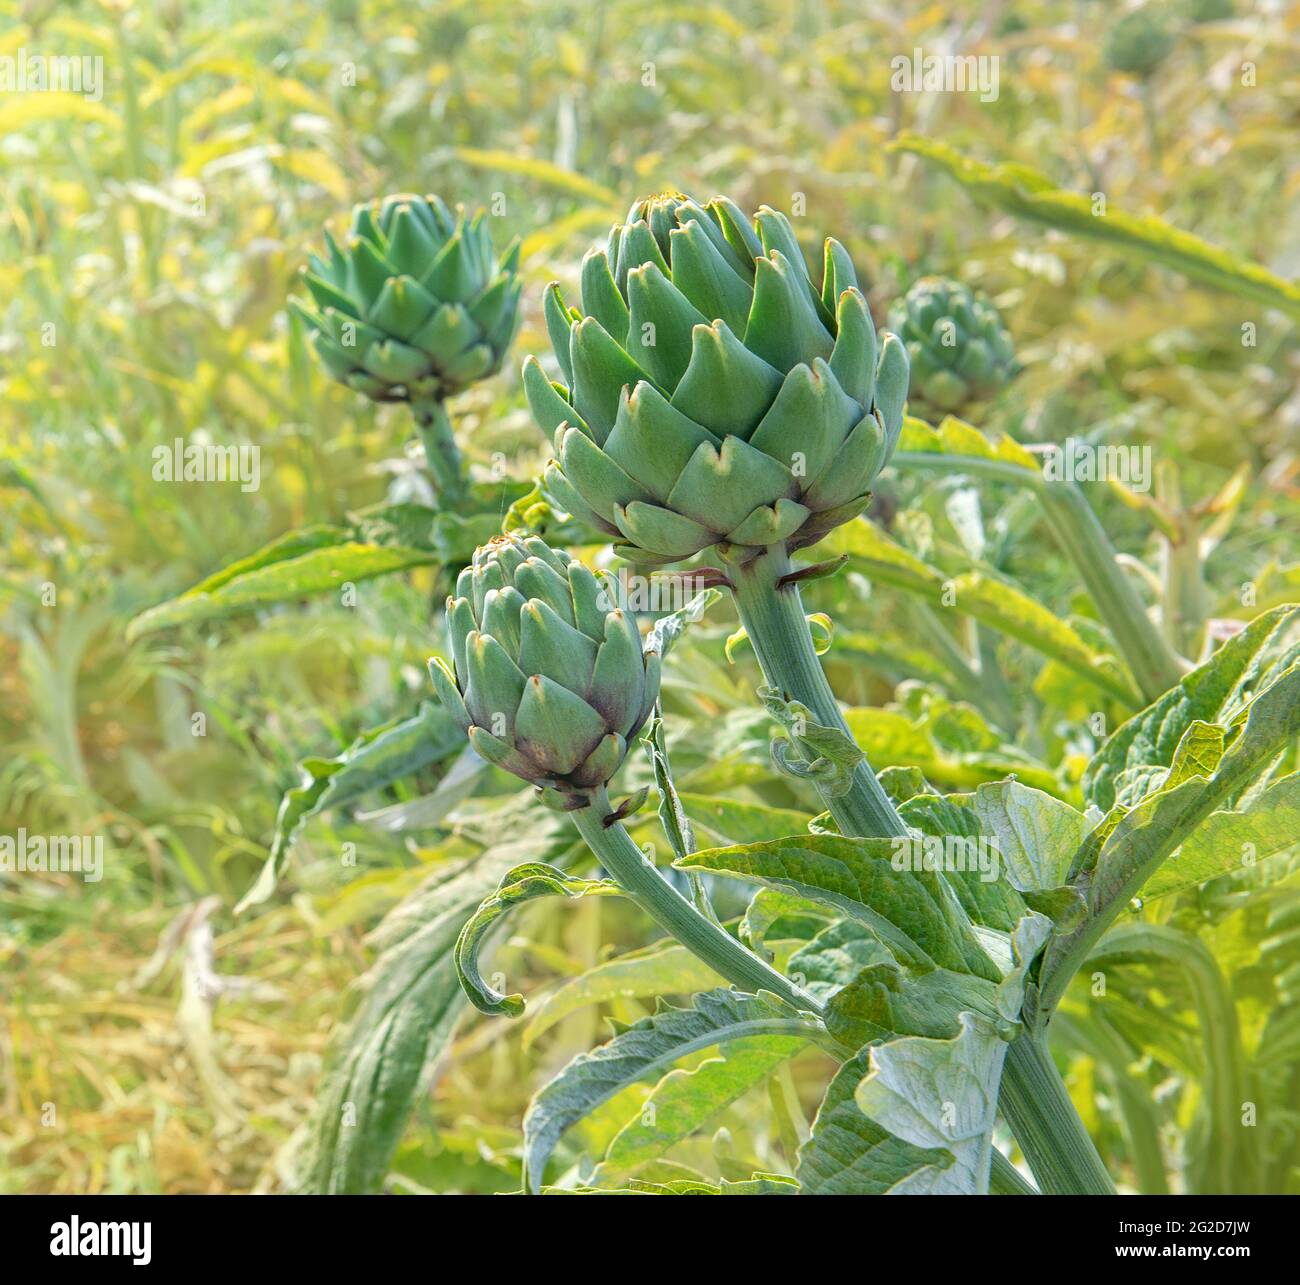 Closeup of artichoke heads in a field, selective focus Stock Photo